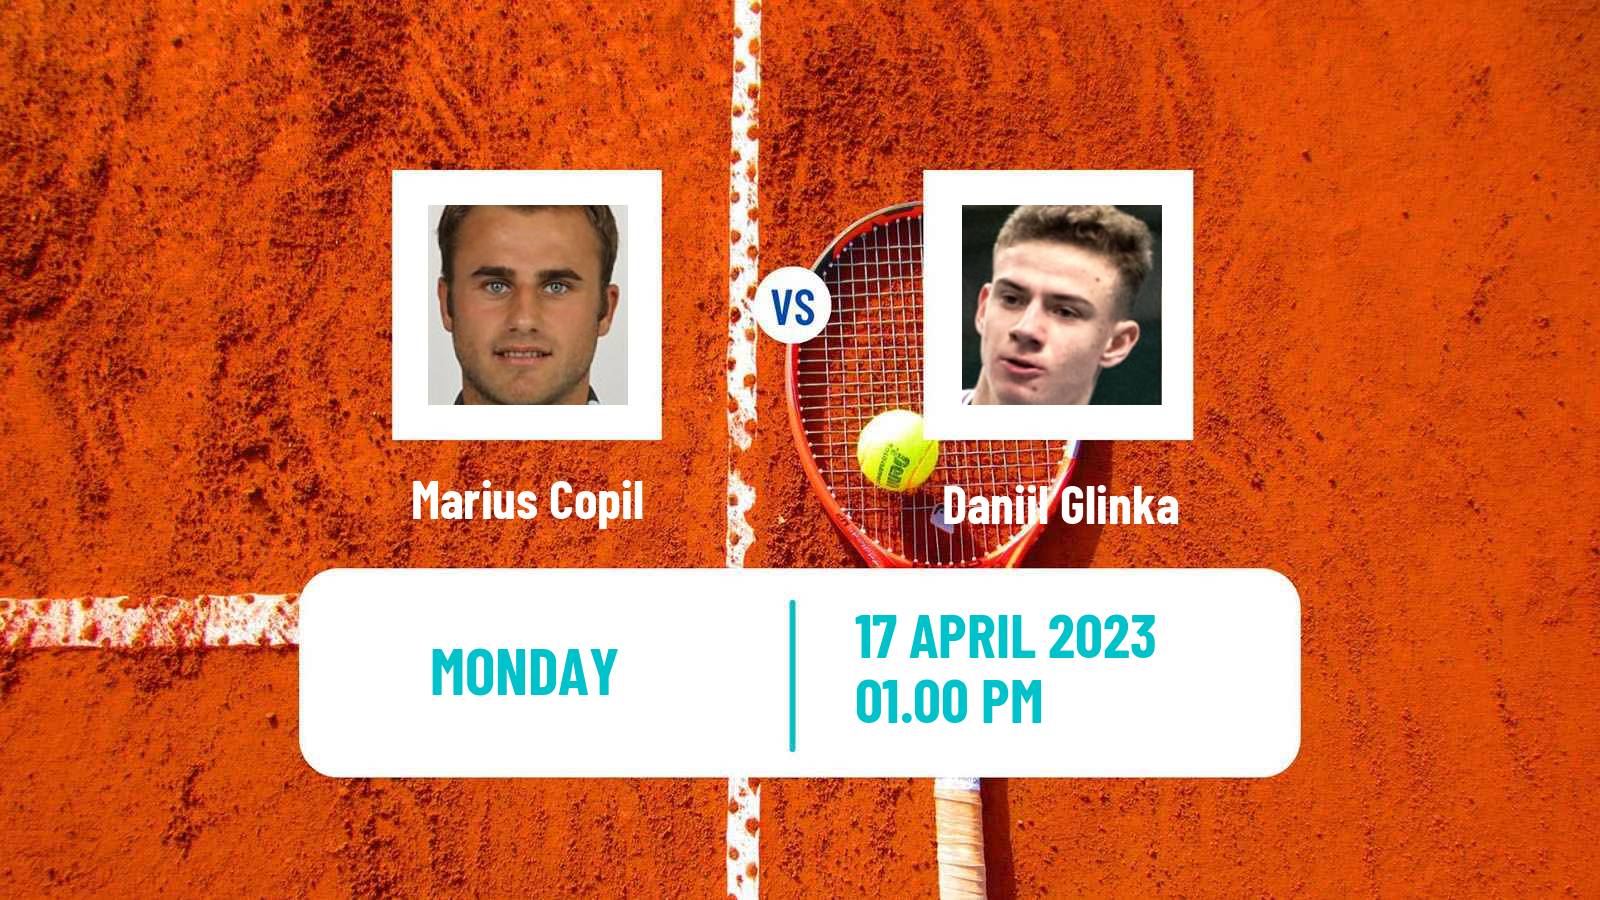 Tennis ATP Challenger Marius Copil - Daniil Glinka